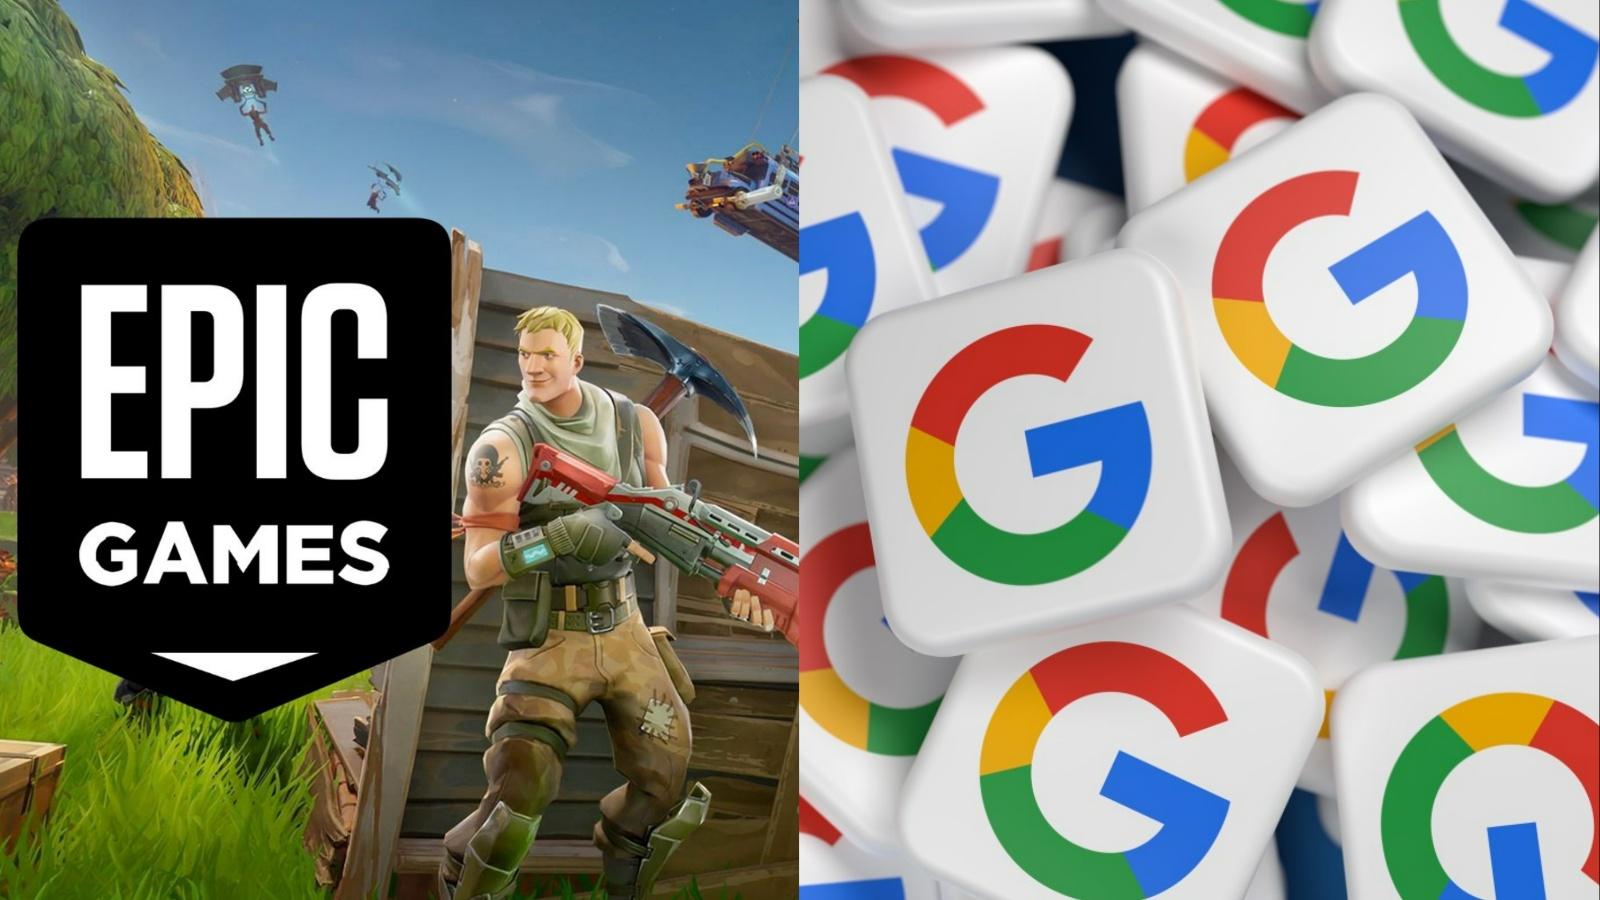 Epic Games prevails over Google in legal battle